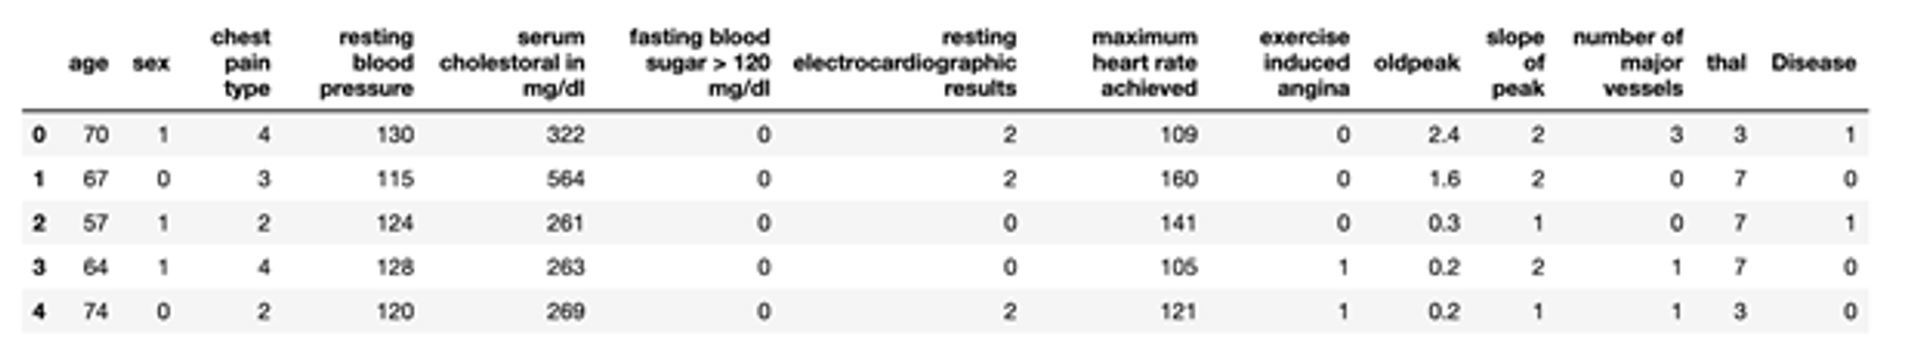 Heart disease dataset in PyCaret